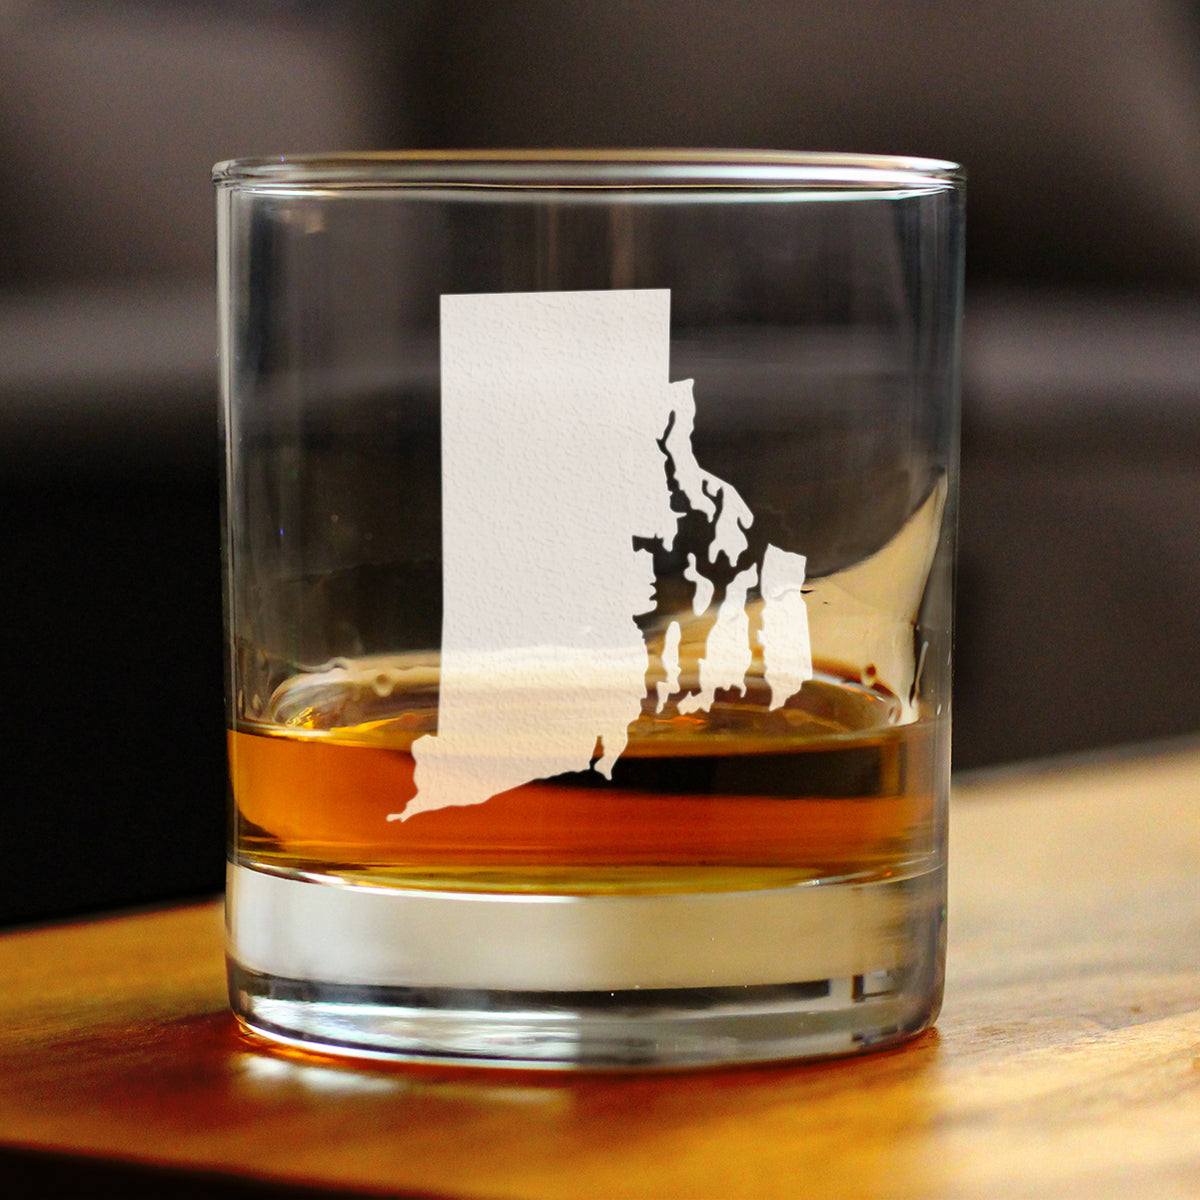 Rhode Island State Outline Whiskey Rocks Glass - State Themed Drinking Decor and Gifts for Rhode Islander Women &amp; Men - 10.25 Oz Whisky Tumbler Glasses